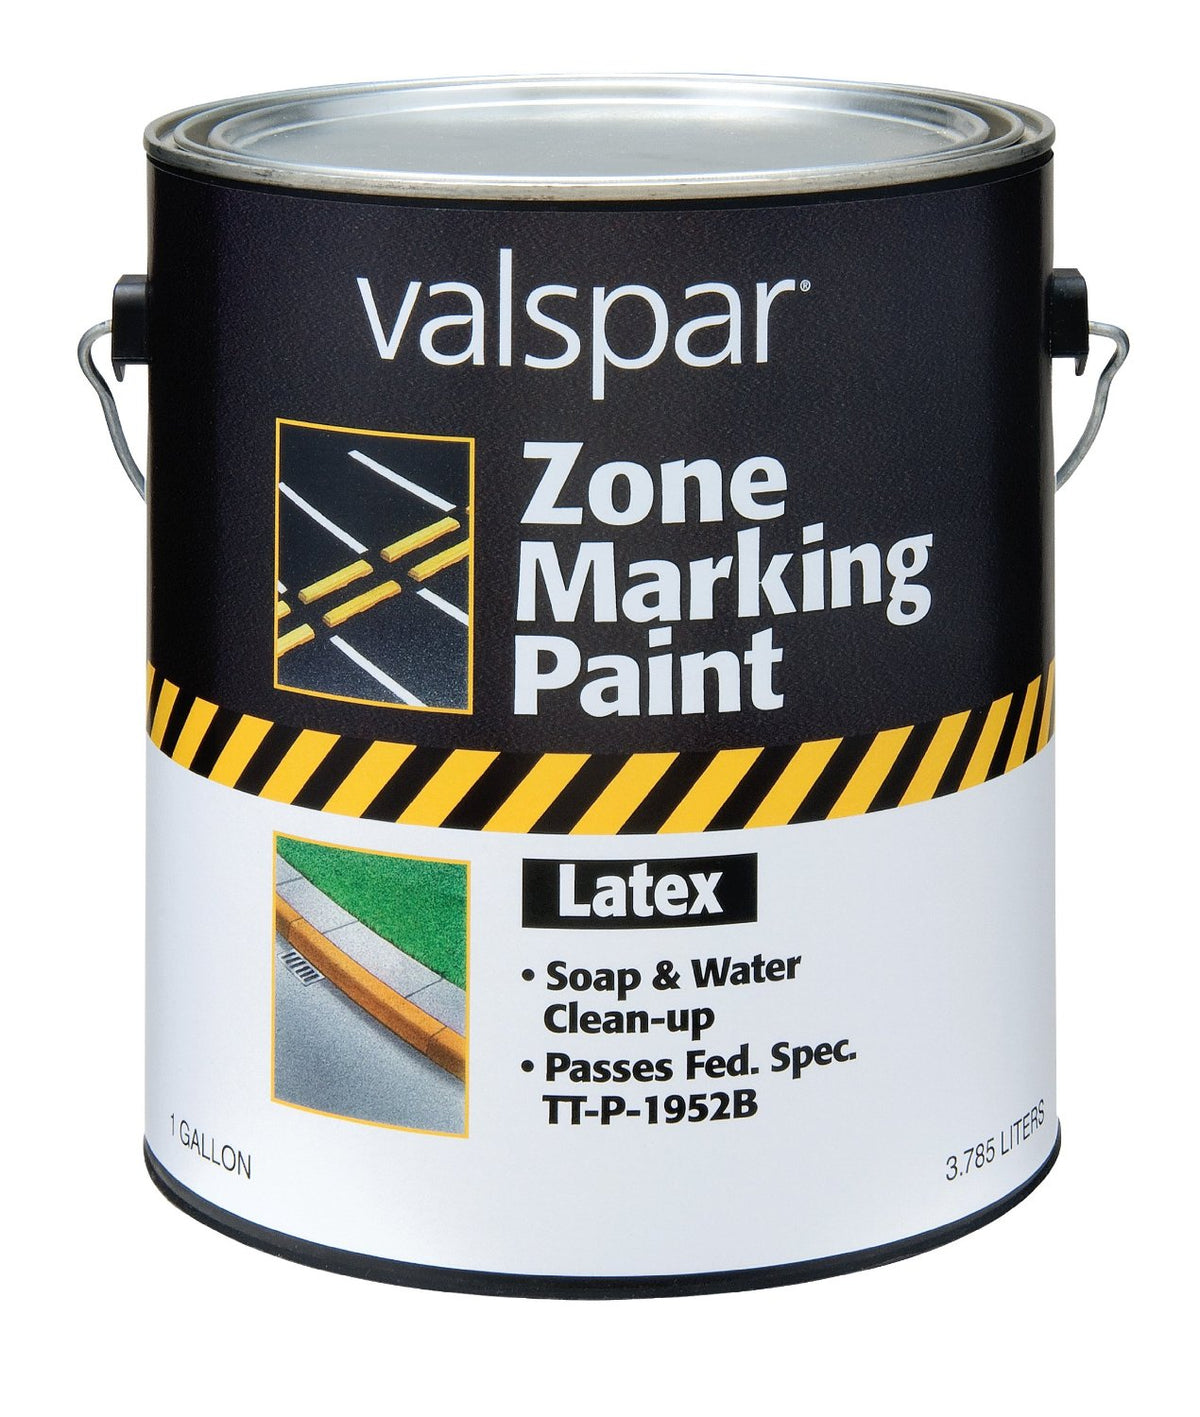 Valspar 024.0000137.007 Latex Zone Marking Paint 1 Gallon, Blue